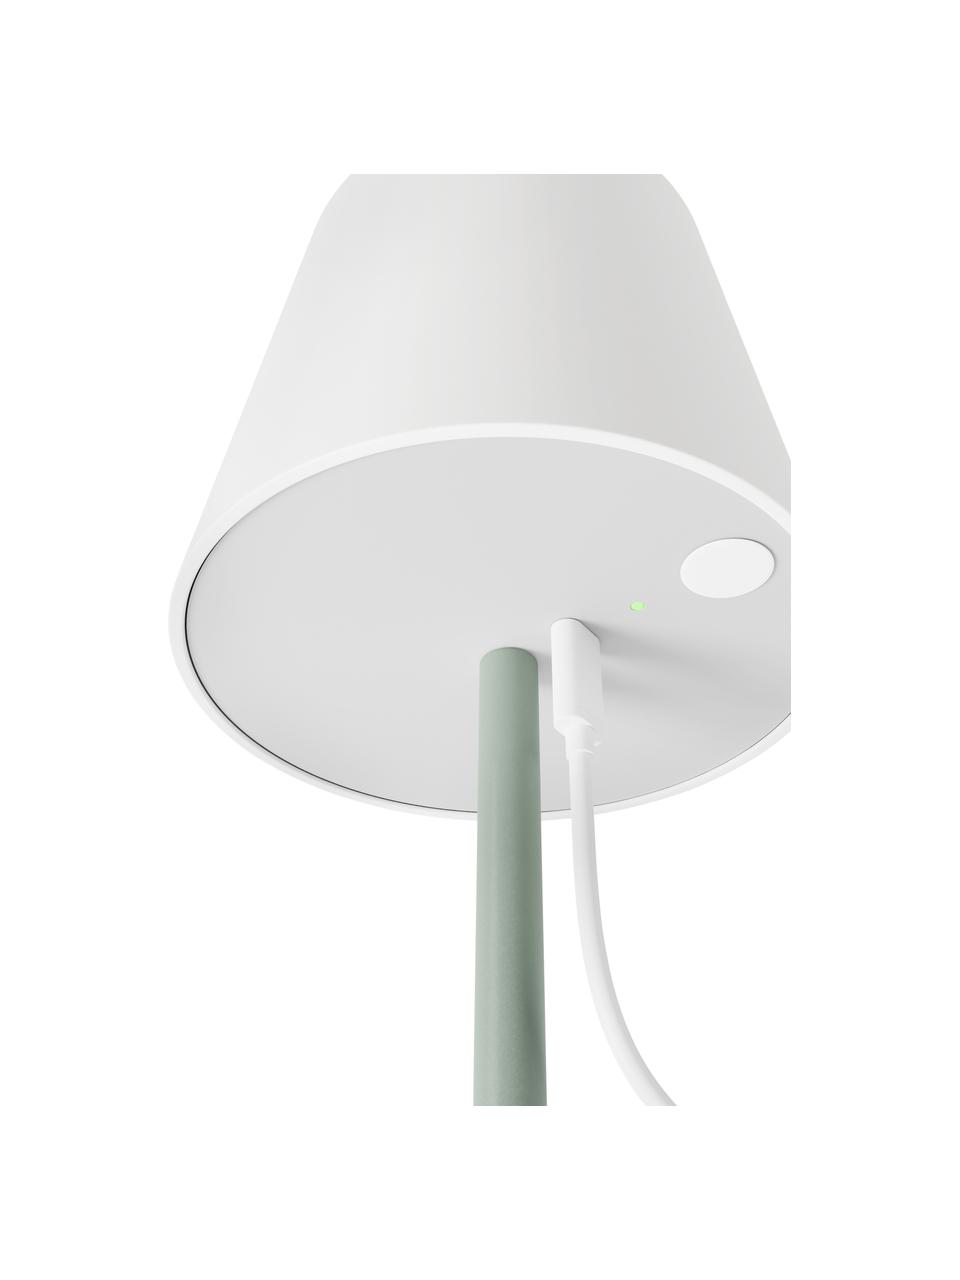 Stmievateľná stolová lampa s USB pripojením Fausta, Zelená, biela, modrá, Ø 13 x V 37 cm